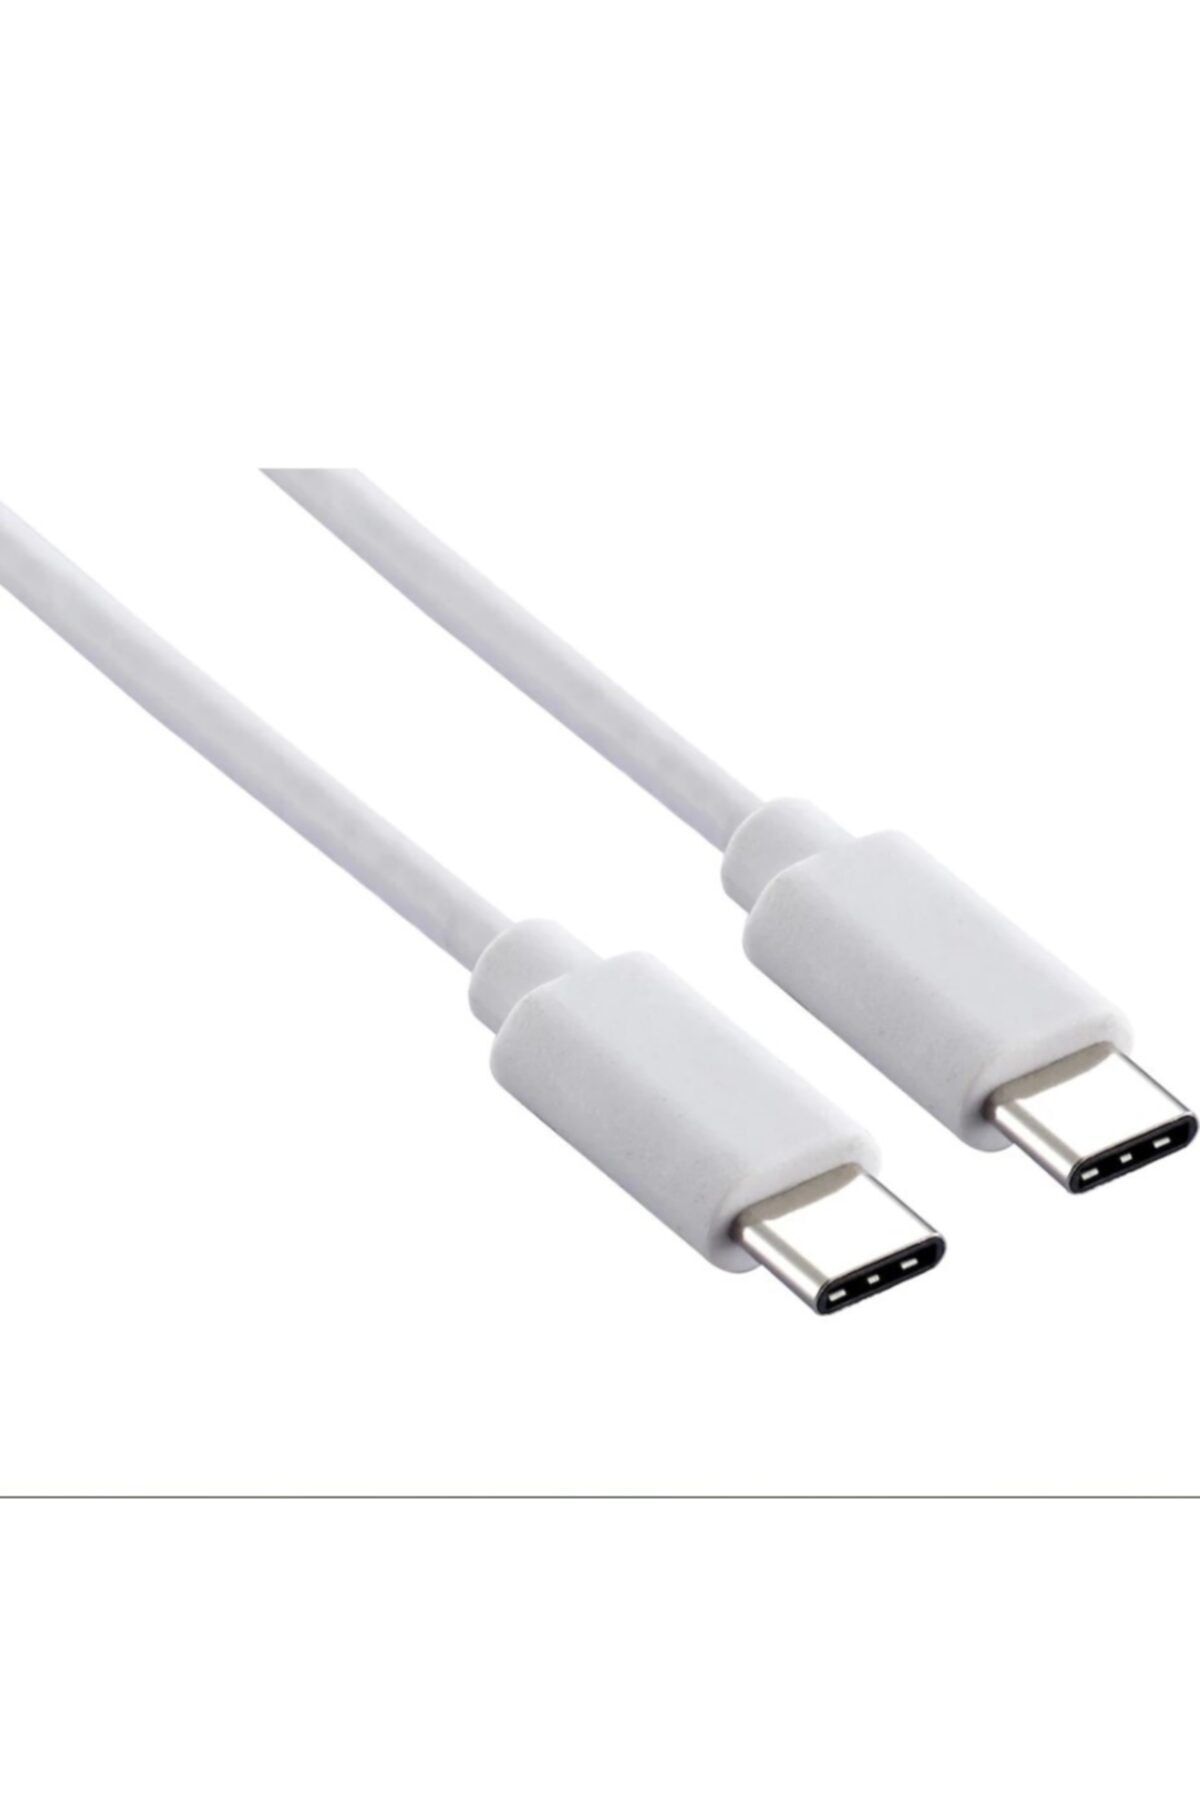 Genel Markalar Dıgı Type C Kablo İki Ucu Type C USB C Kablo 1 Metre Beyaz